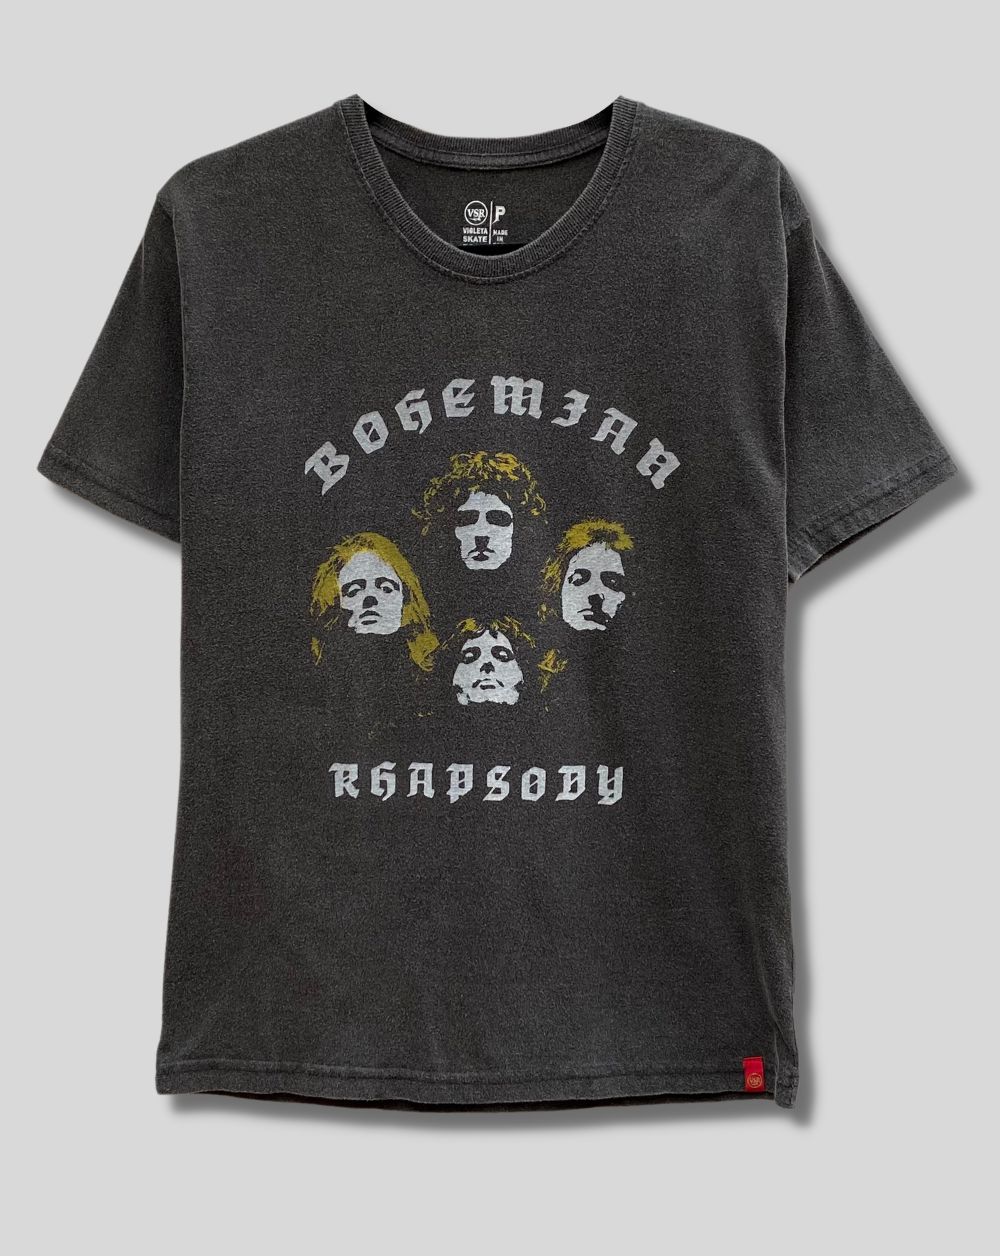 Camiseta Queen Bohemian Rhapsody